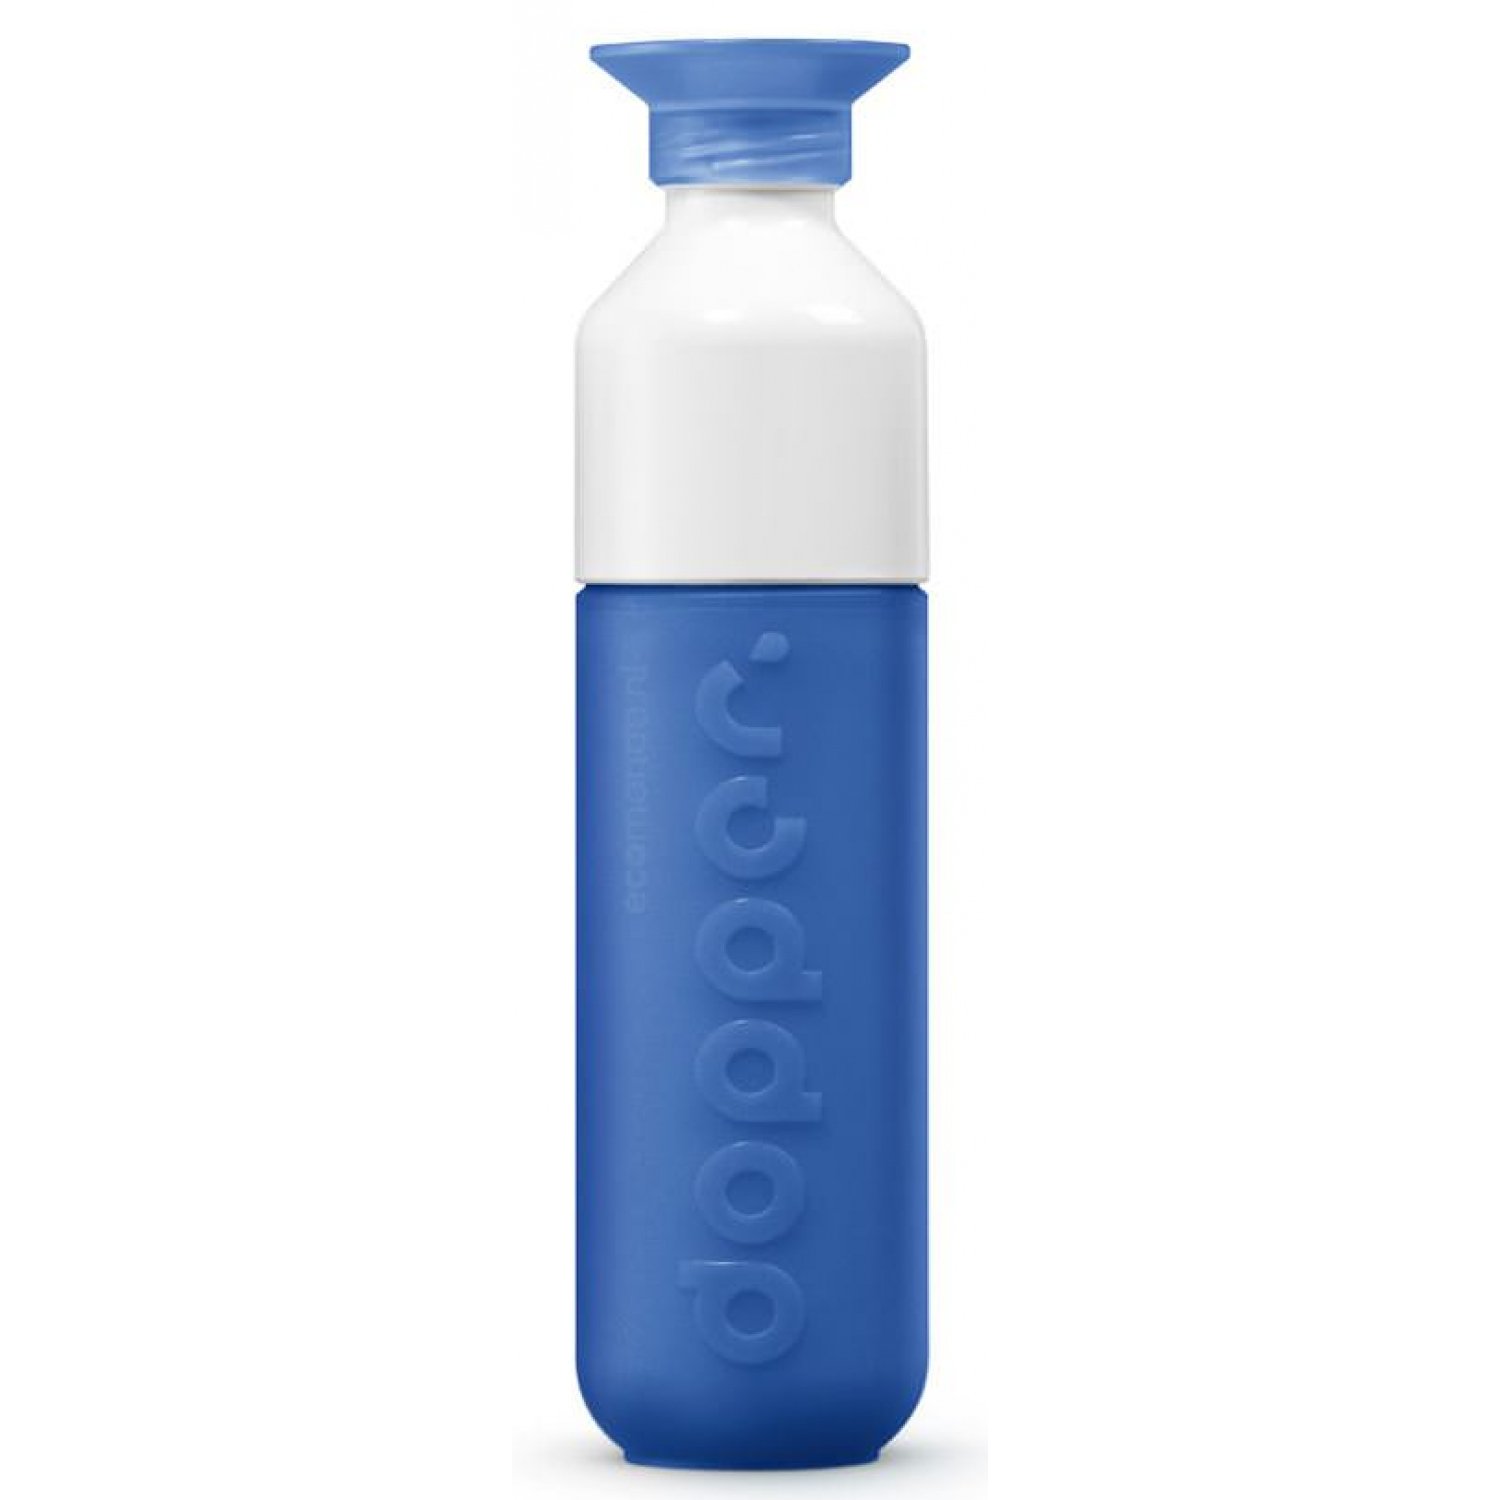 Ontslag Snooze Neuropathie Dopper Waterfles Pacific Blue BPA vrij • Check de site voor meer